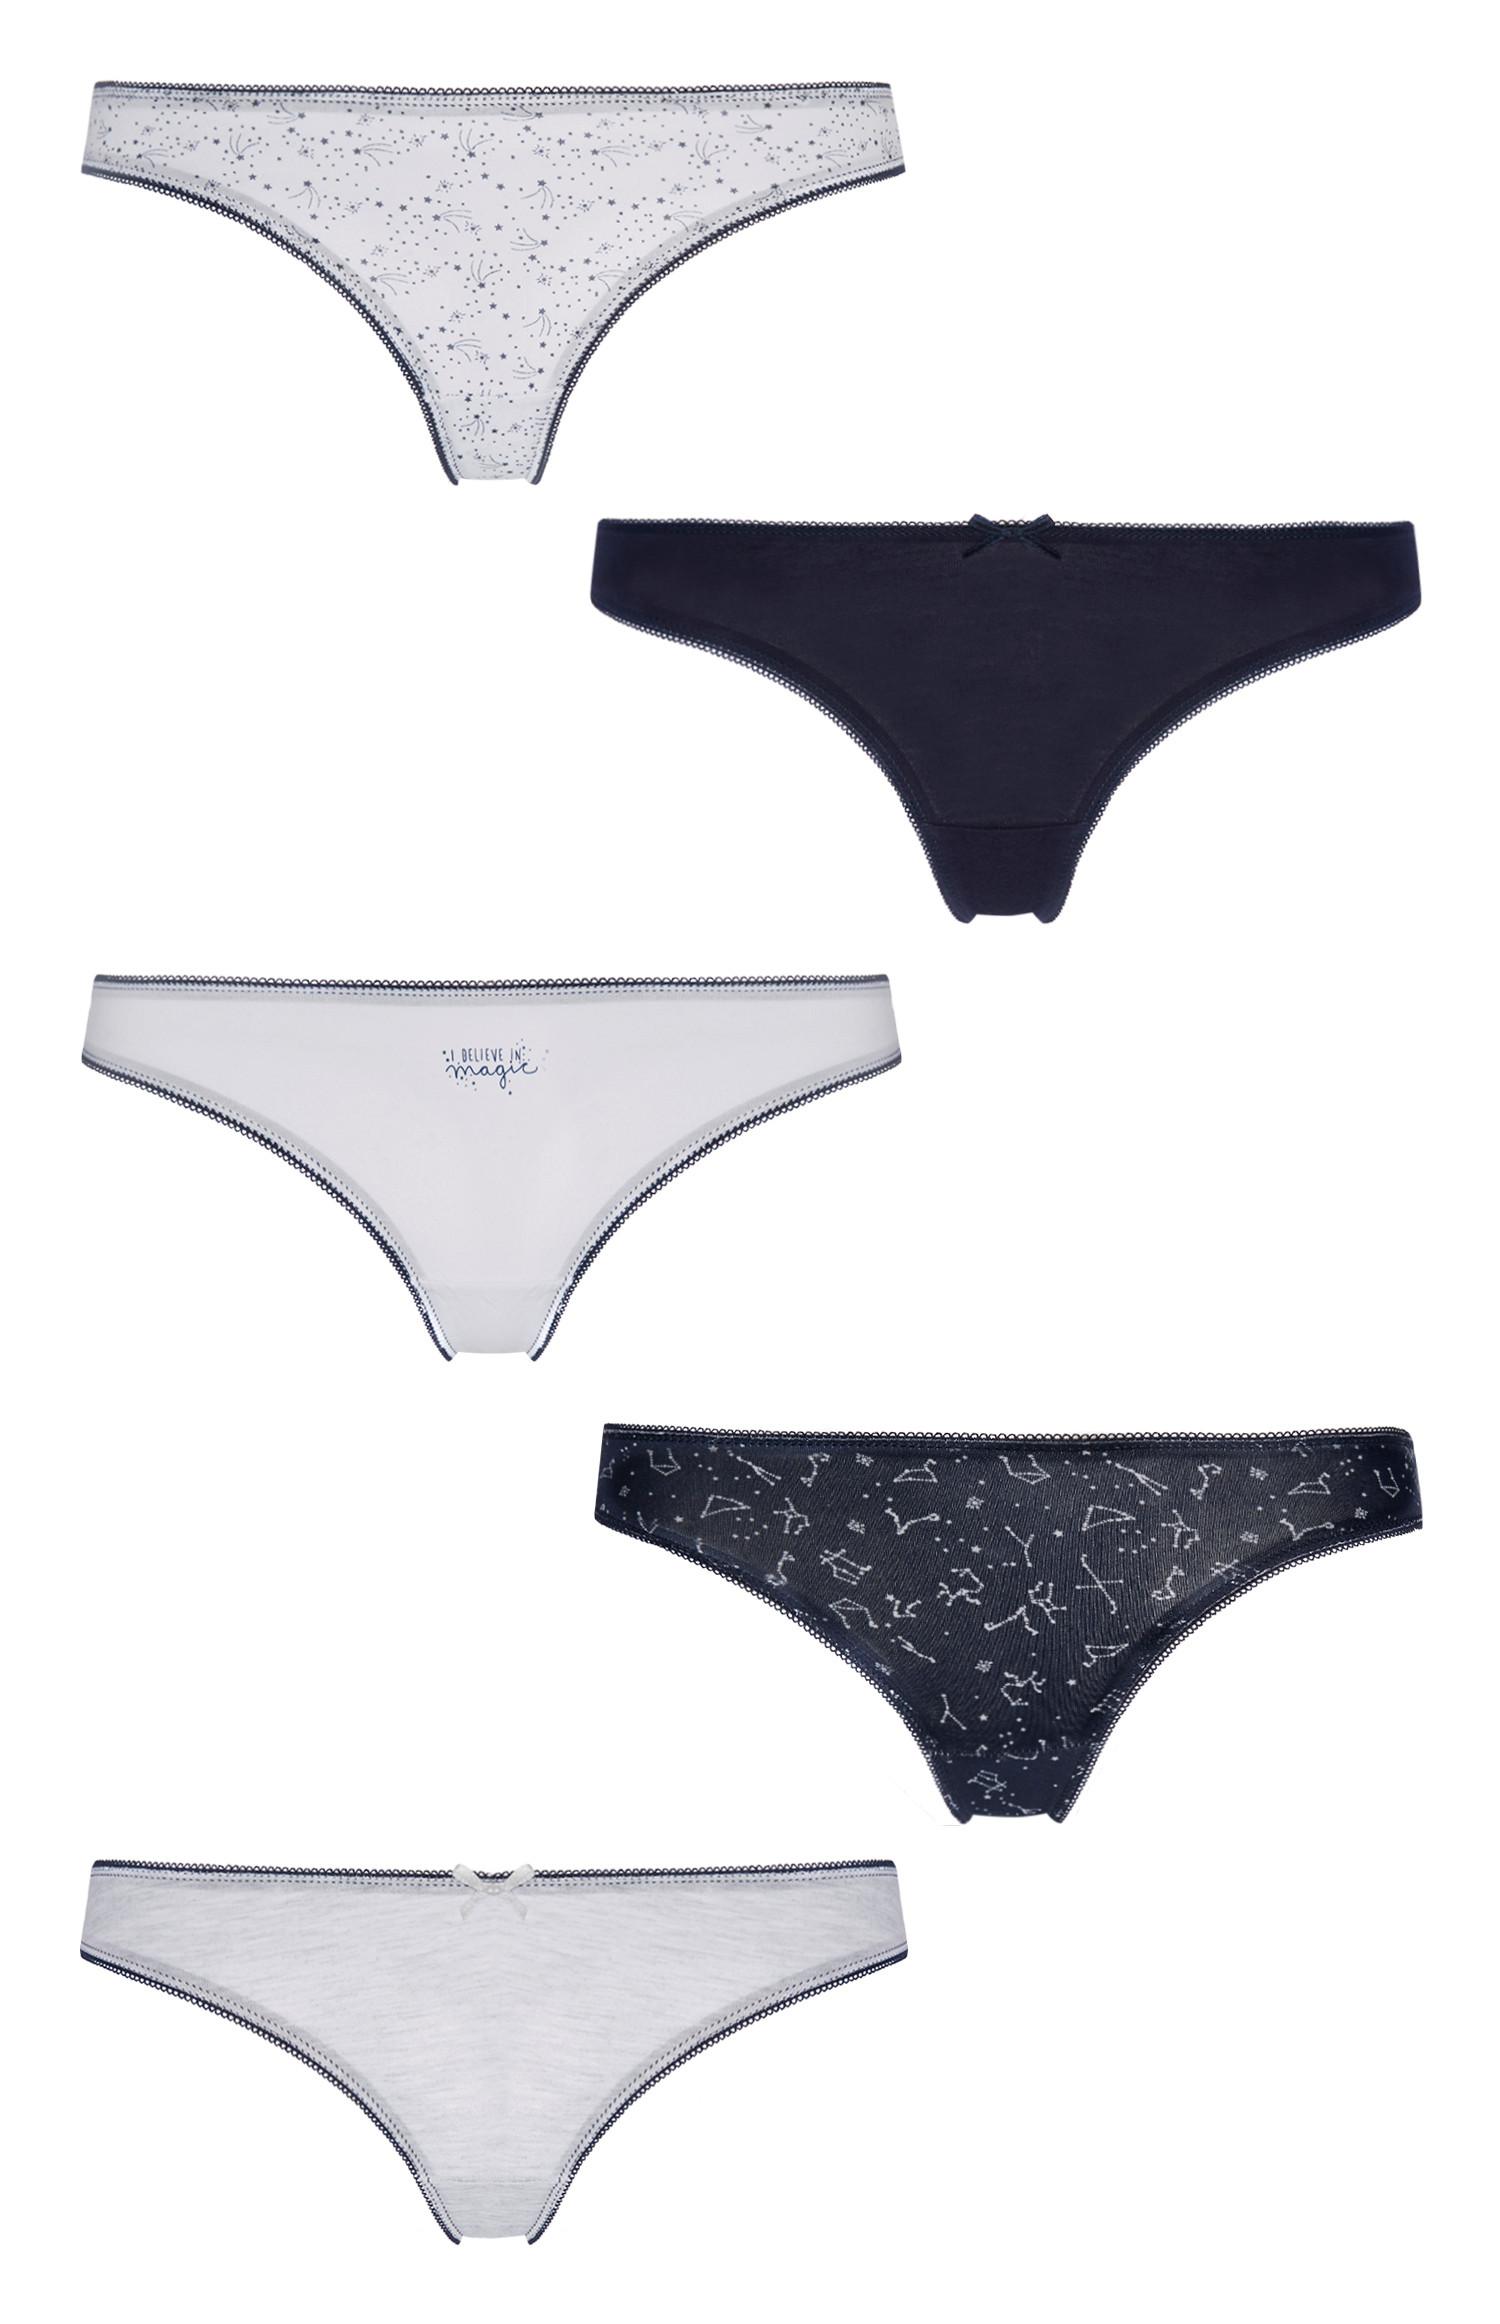 Dark Grey Thong 5Pk | Thong | Briefs knickers | Lingerie & Underwear ...